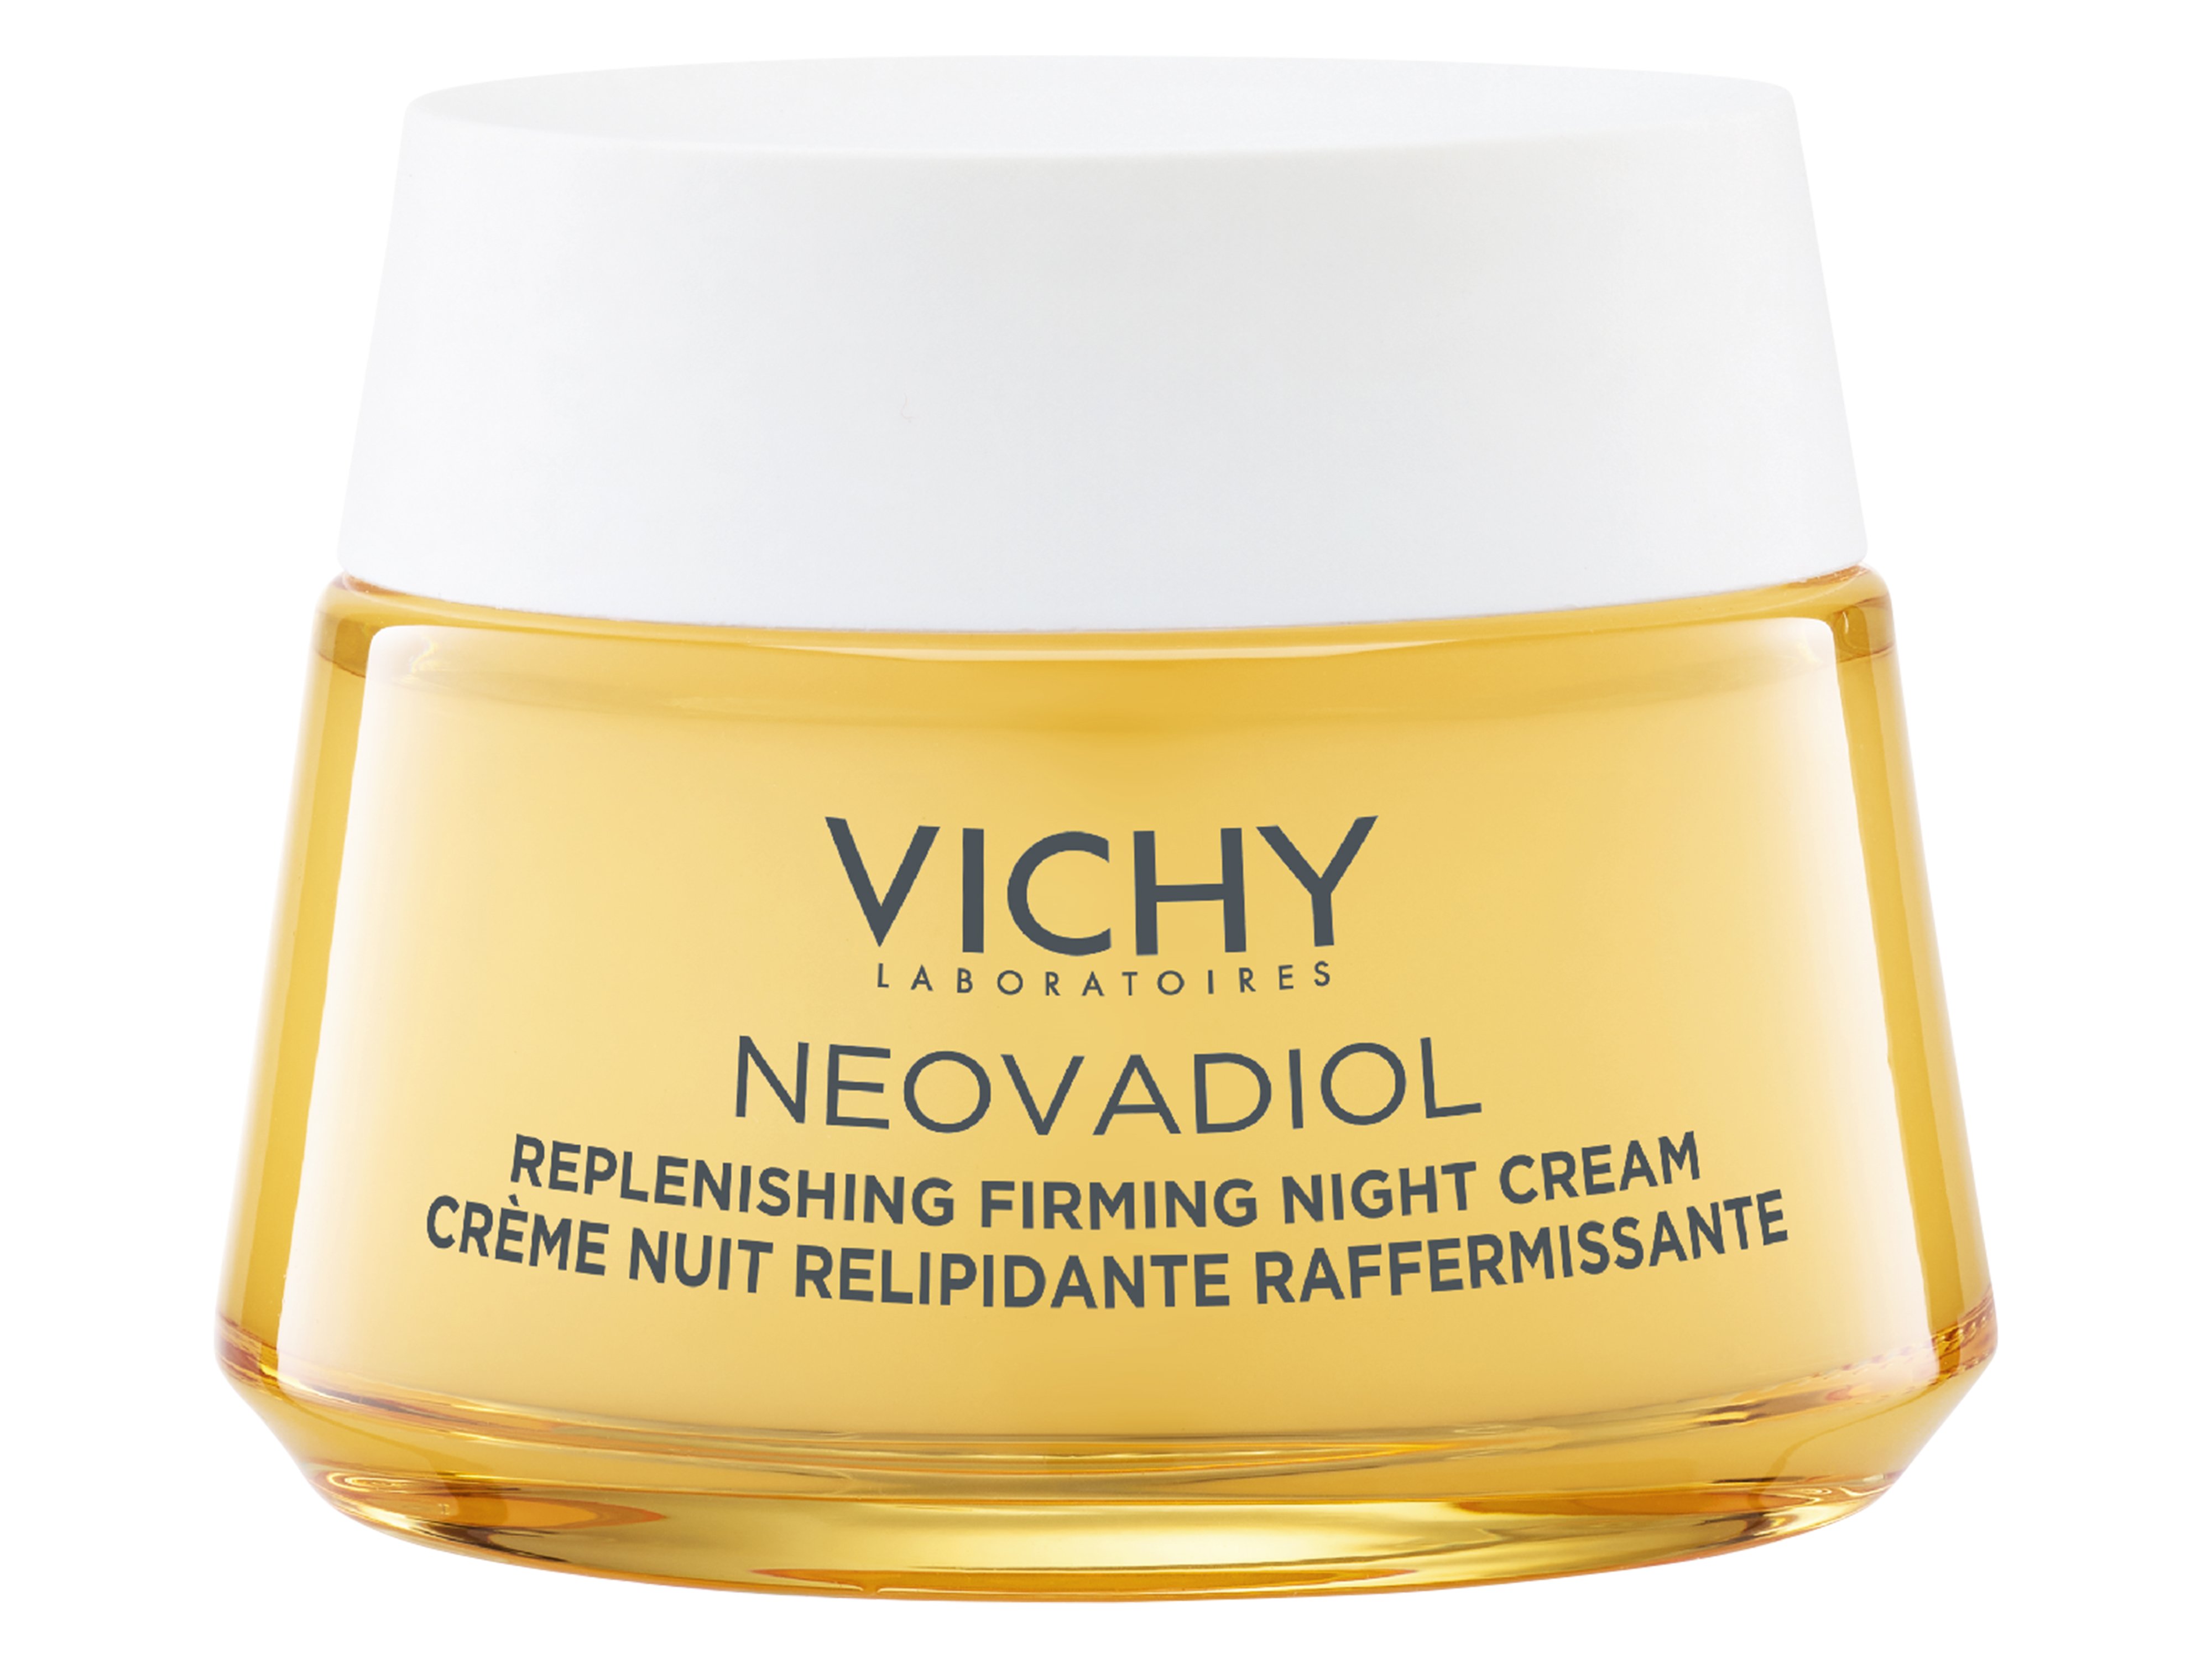 Vichy Neovadiol Replenishing Firming Night Cream, 50 ml